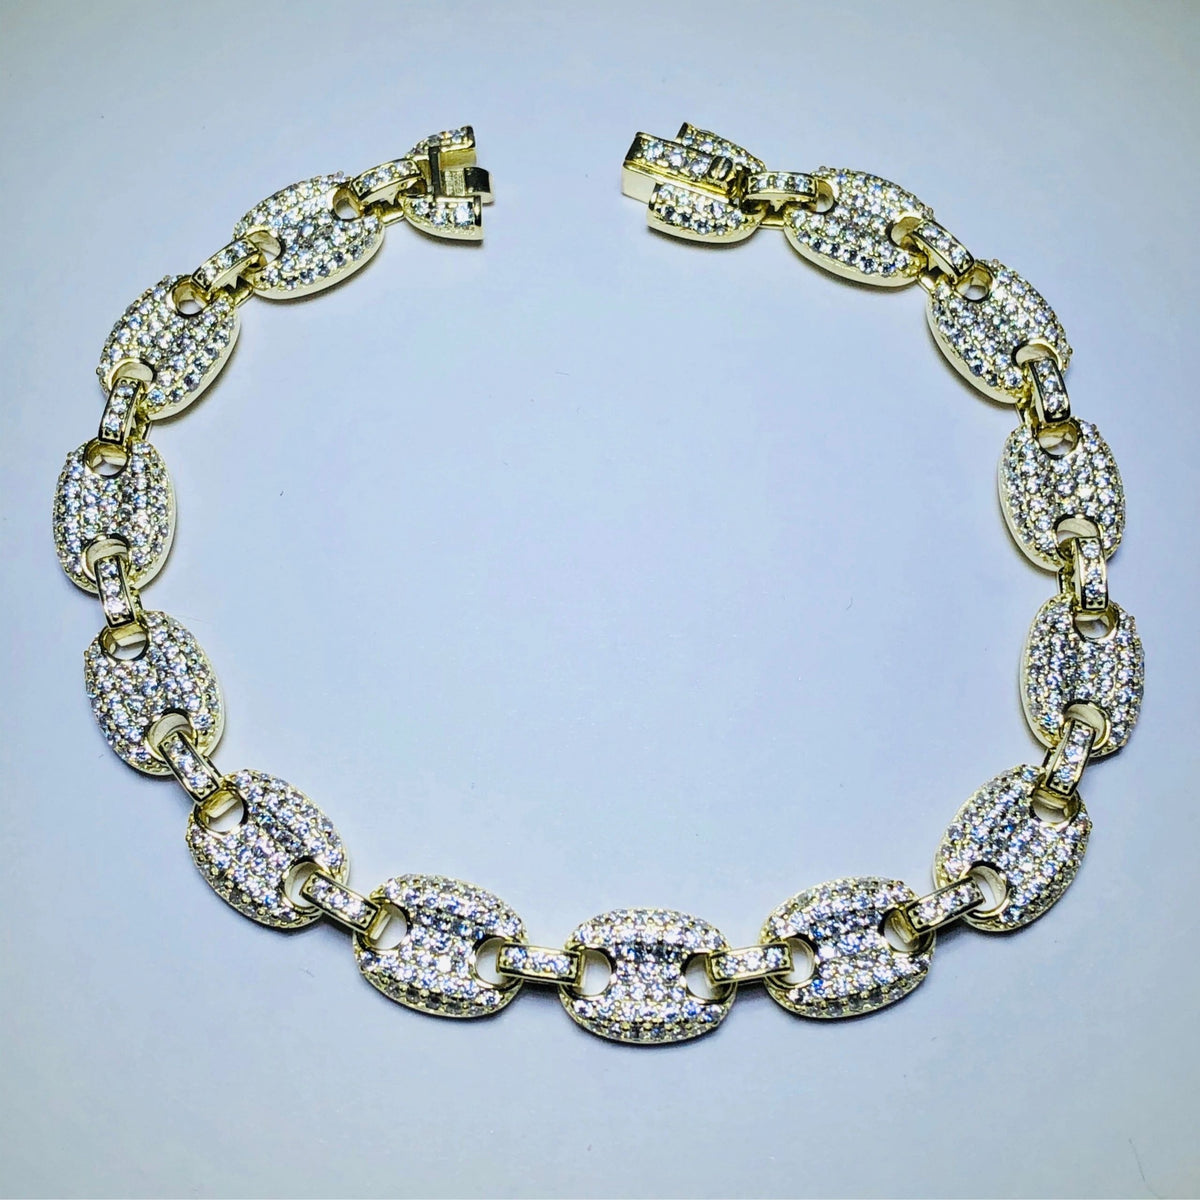 LIV 18k yellow gold over sterling silver pave gucci link bracelet